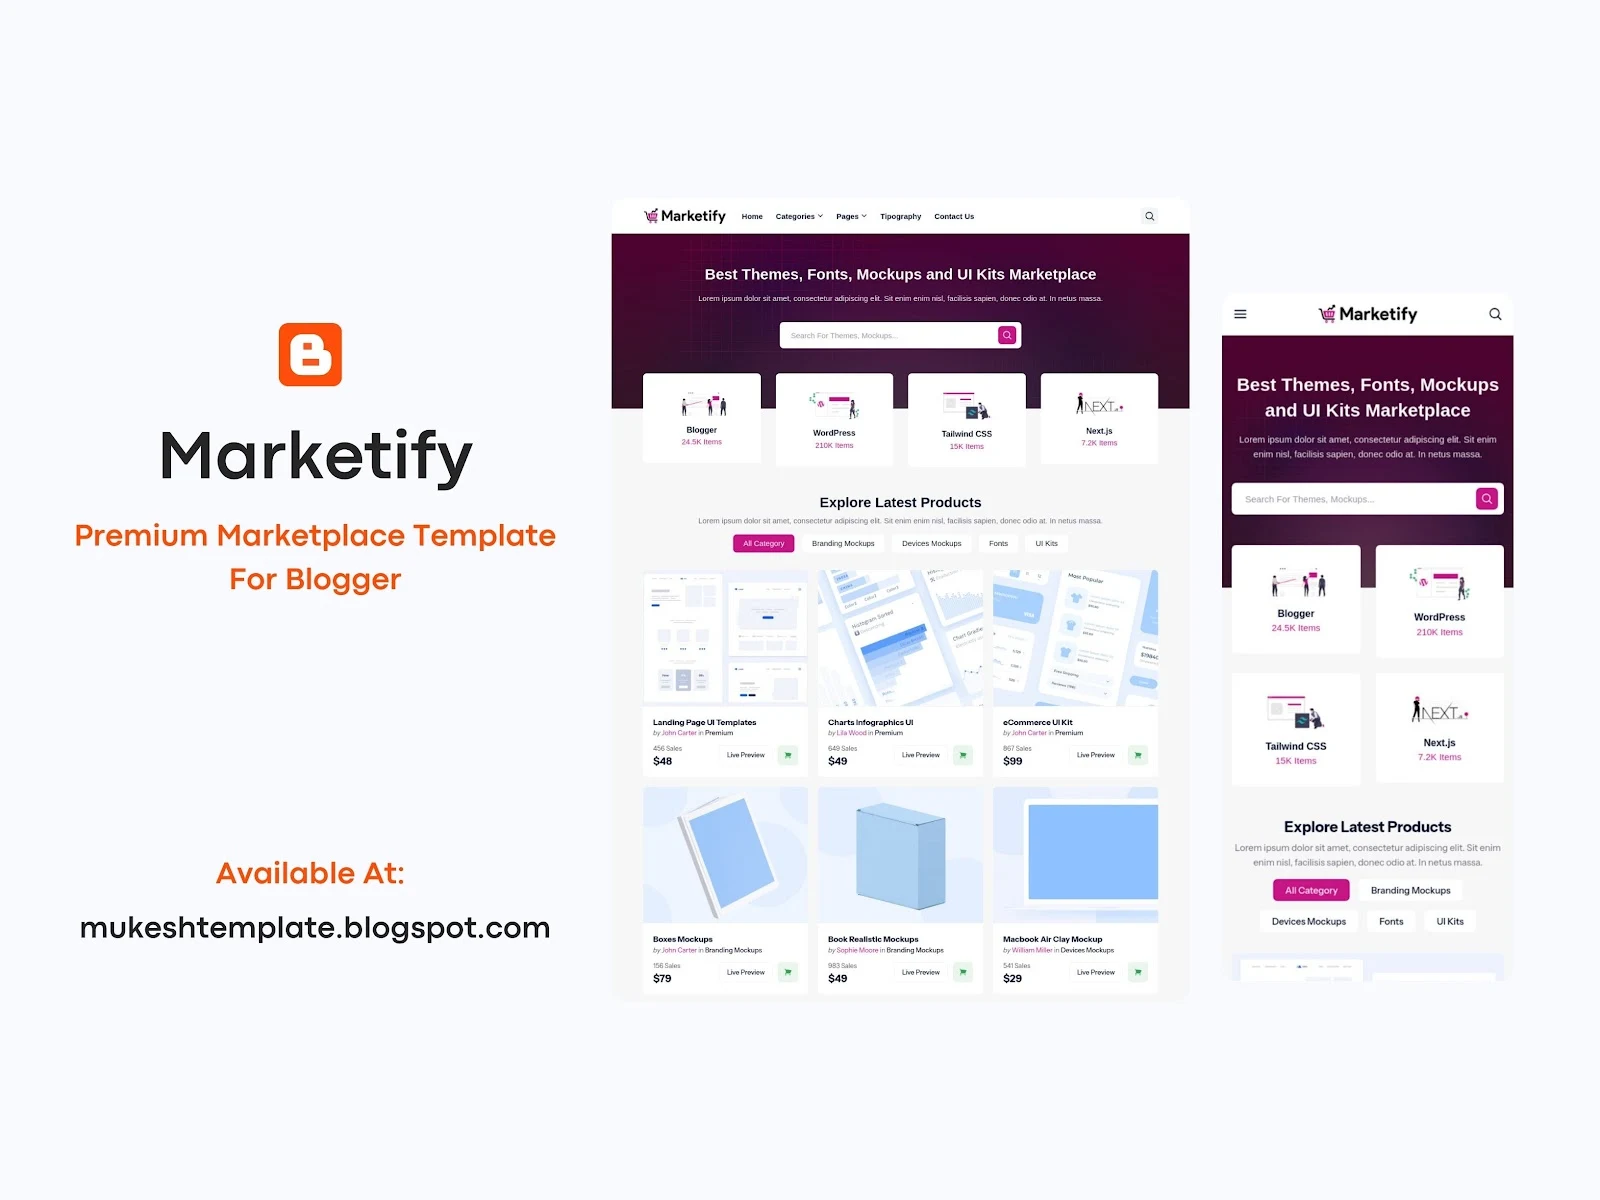 Marketify - Premium Marketplace Template For Blogger